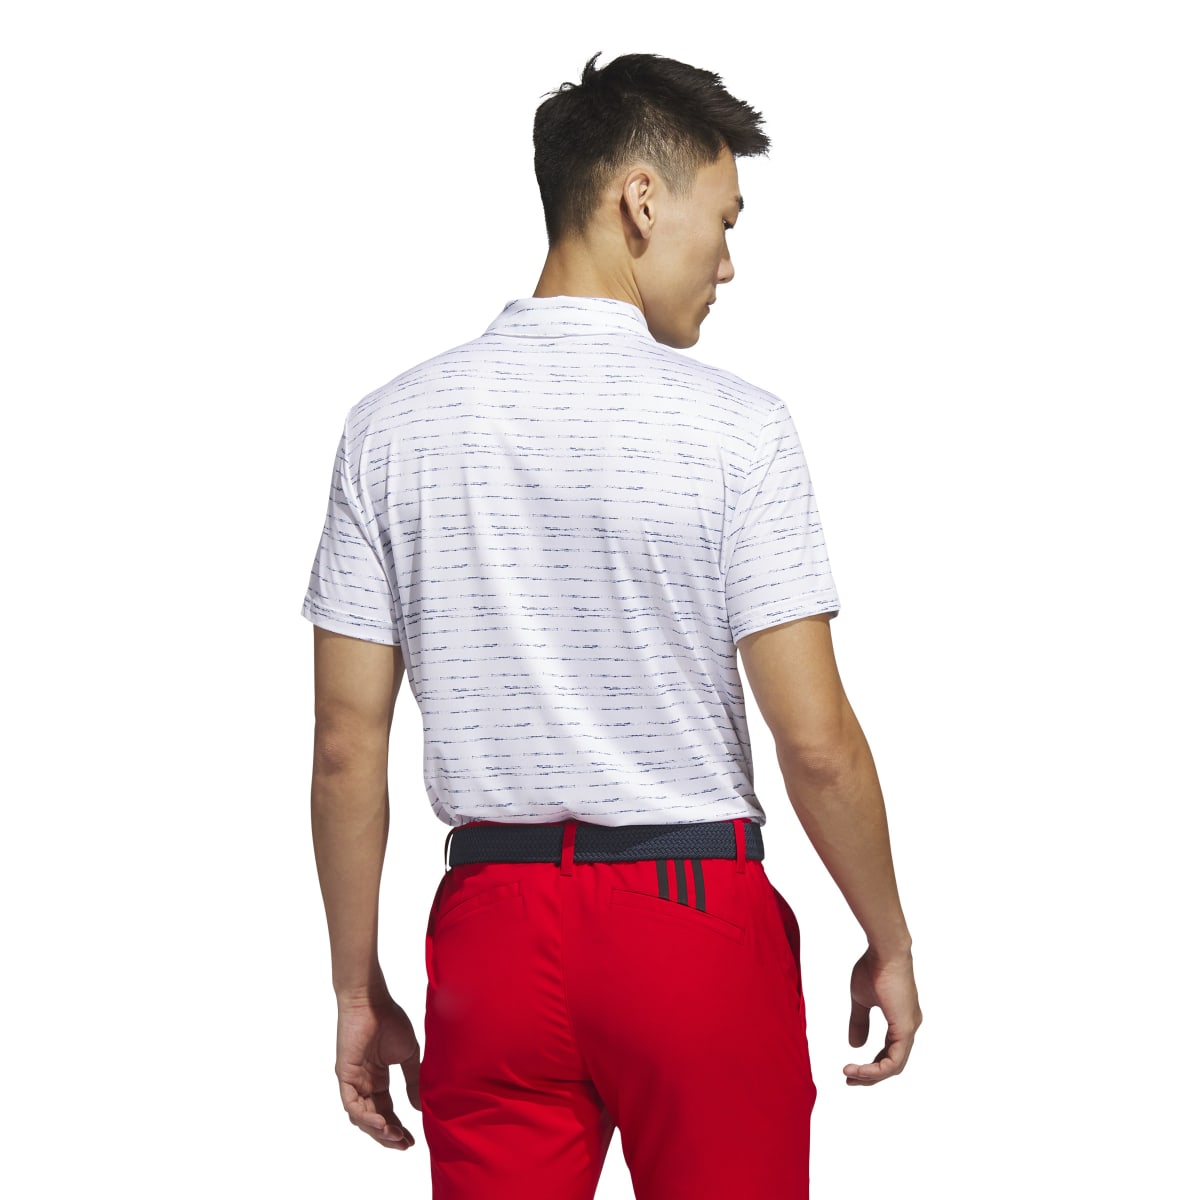 Adidas Men's Stripe Zip Golf Polo Shirt 2023 